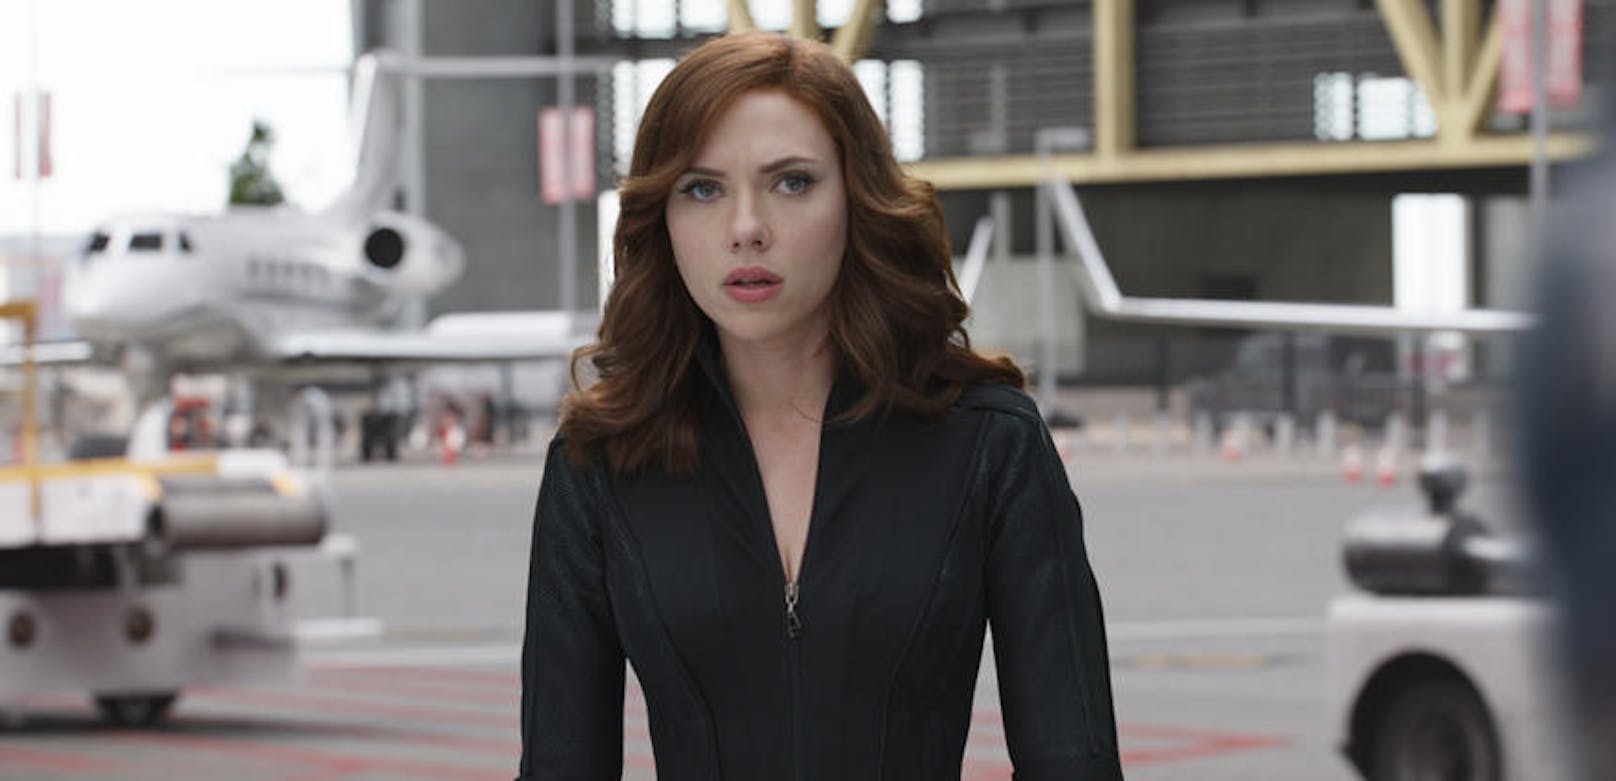 Black Widow/Natasha Romanoff (Scarlett Johansson) in "Captain America: Civil War".